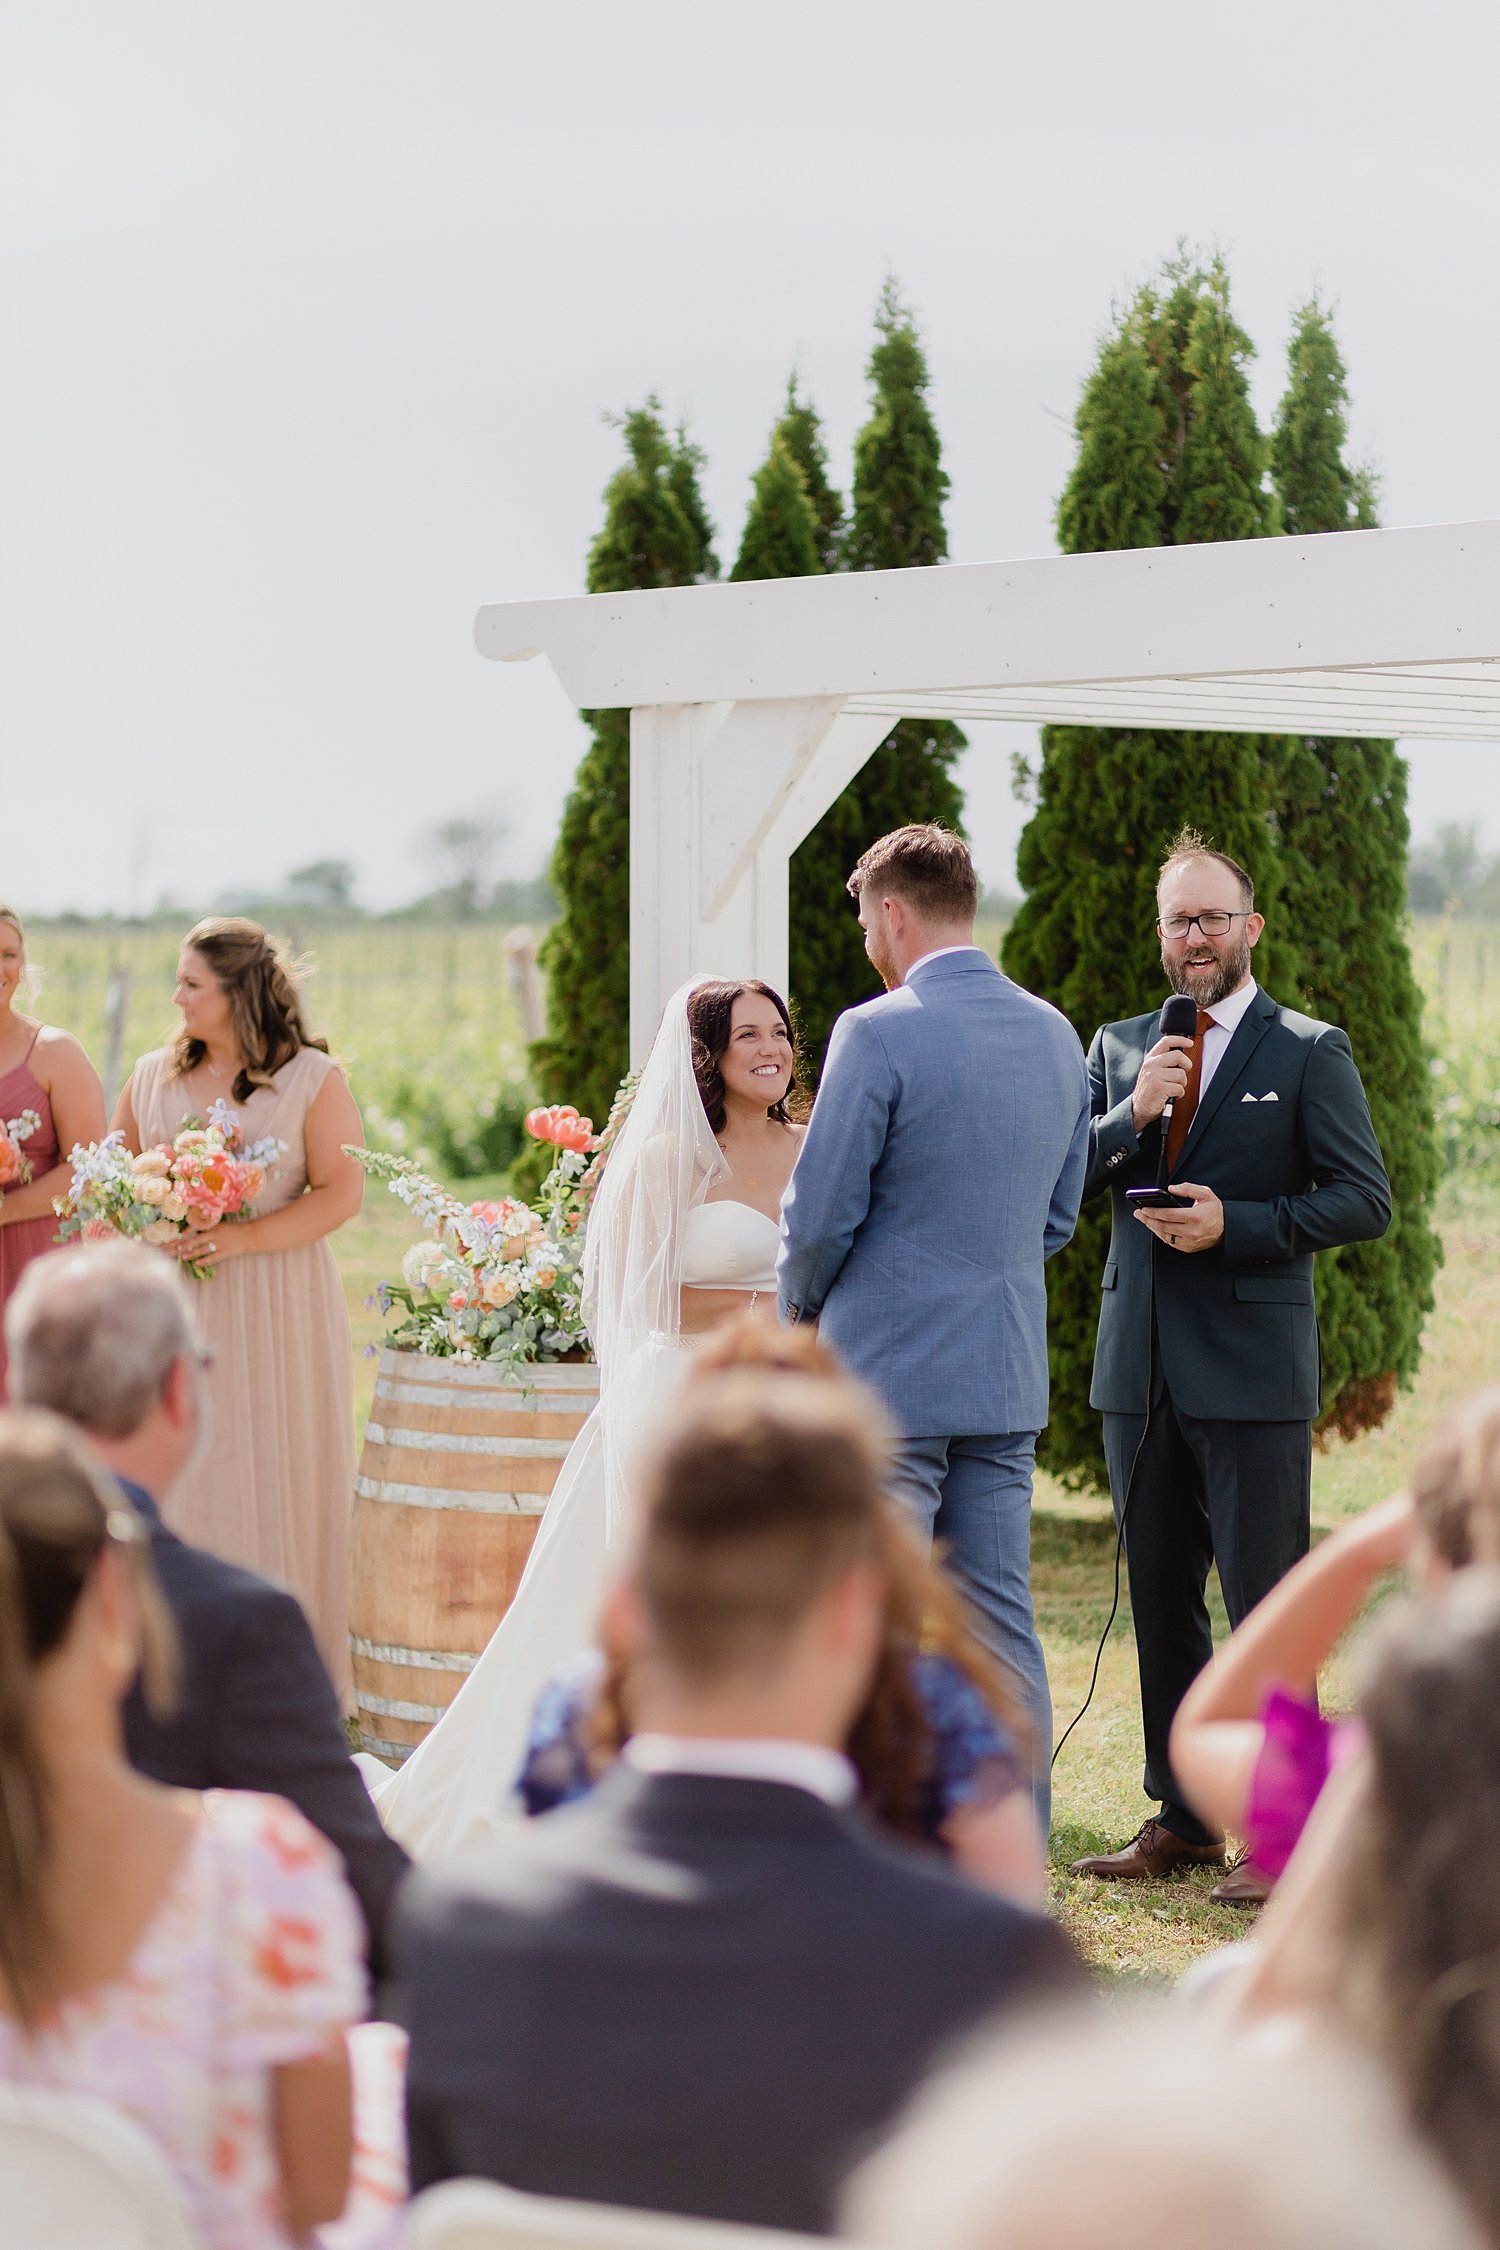 Casa Dea Winery Wedding in Prince Edward County | Prince Edward County Wedding Photographer | Holly McMurter Photographs_0078.jpg